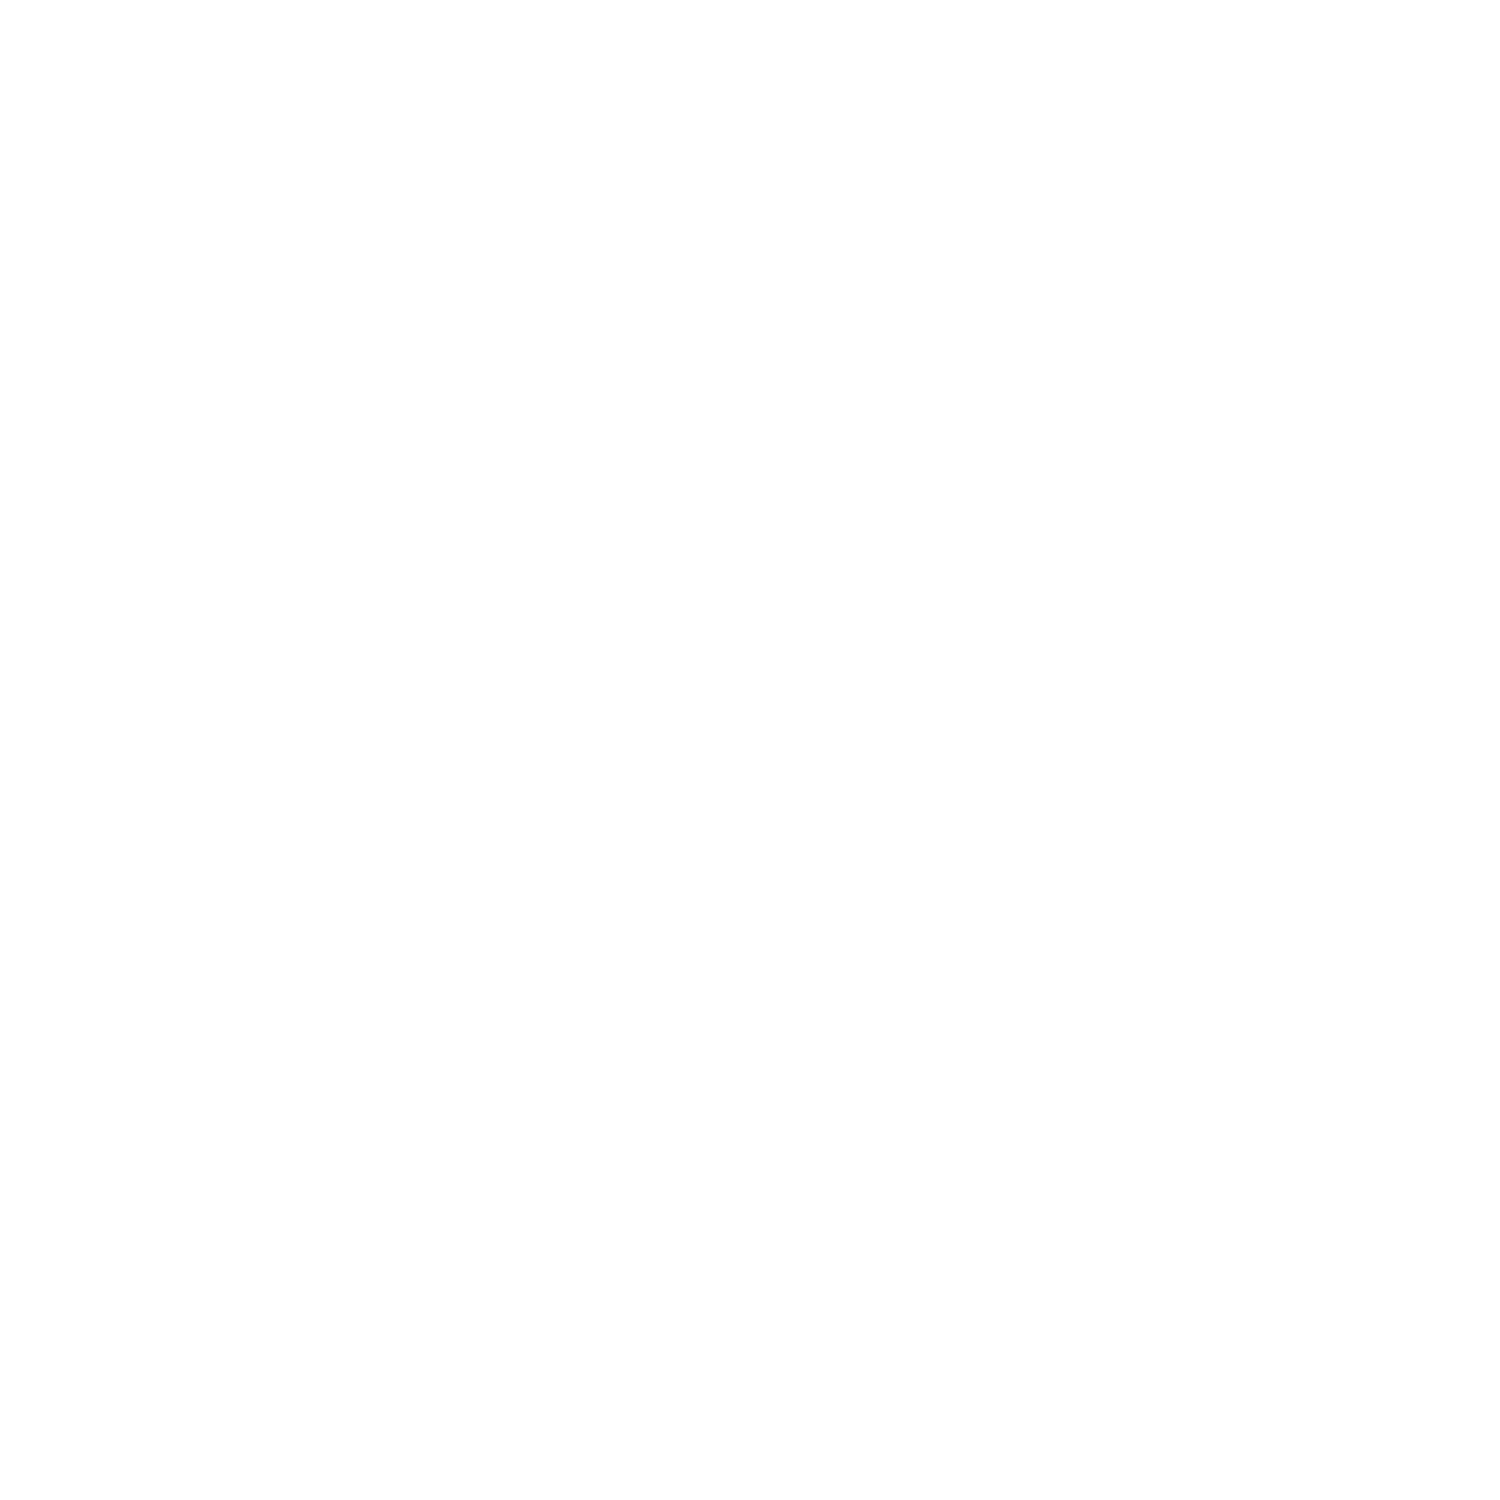 LAST EARTH